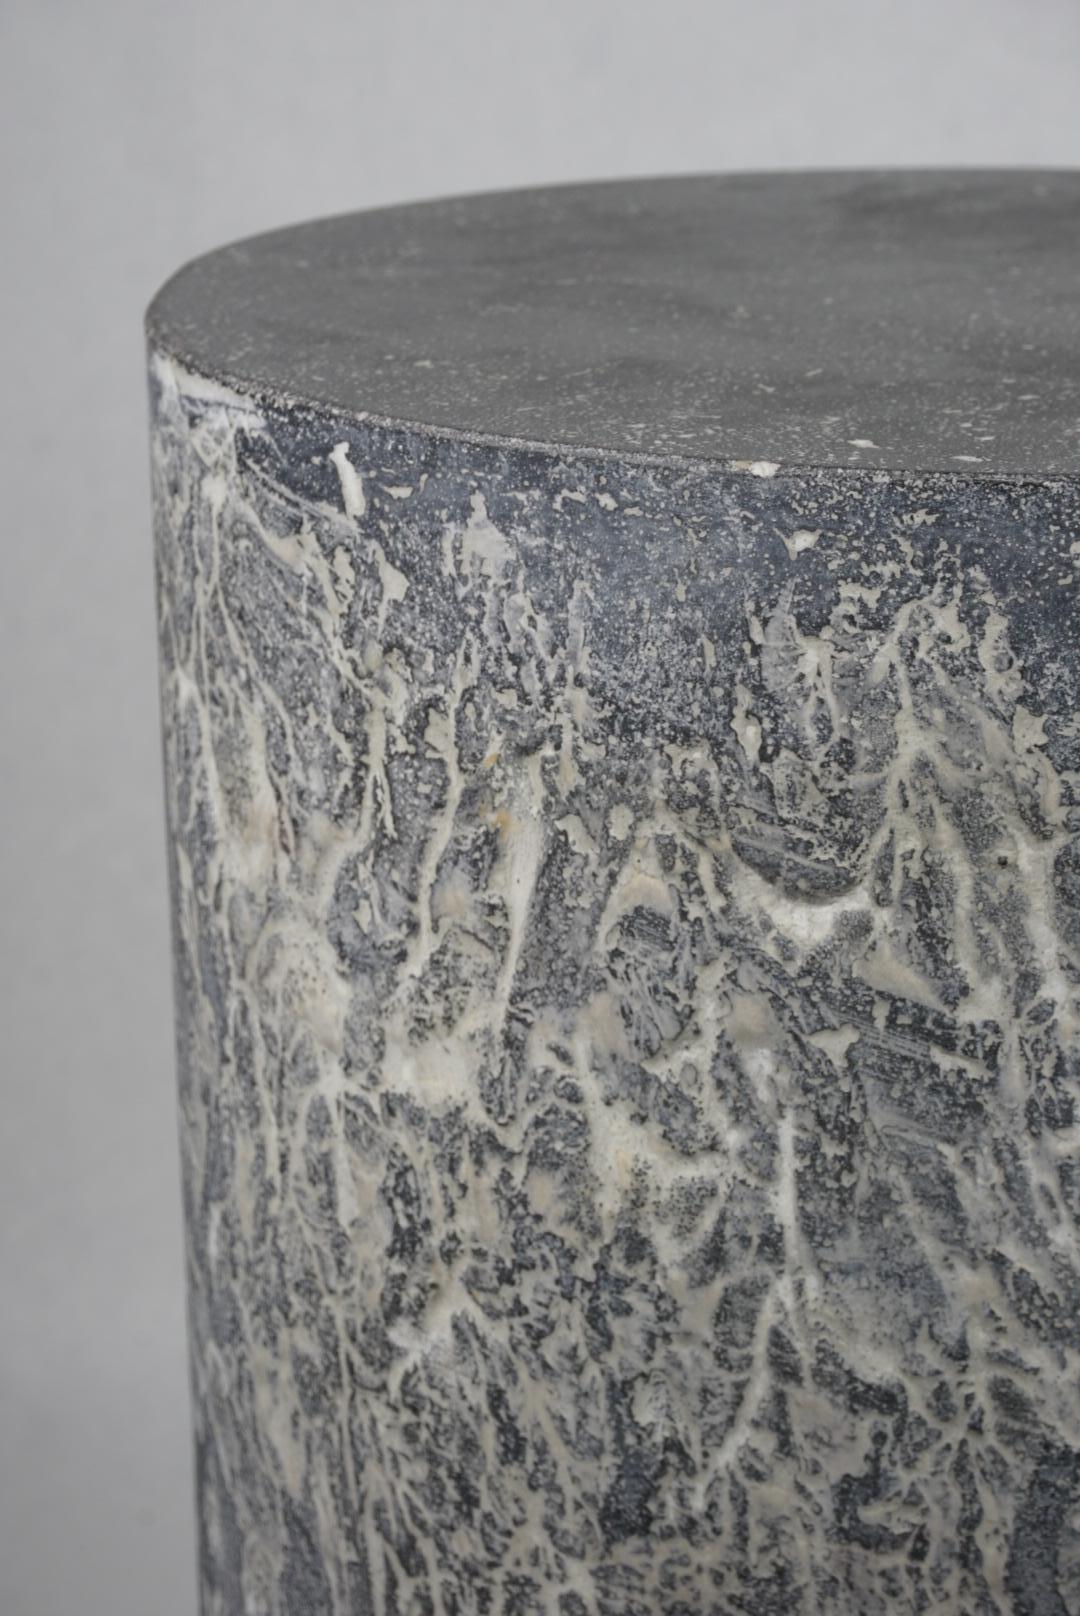 American Dark Grey and White Artistic Concrete End Table, 'Batholith'